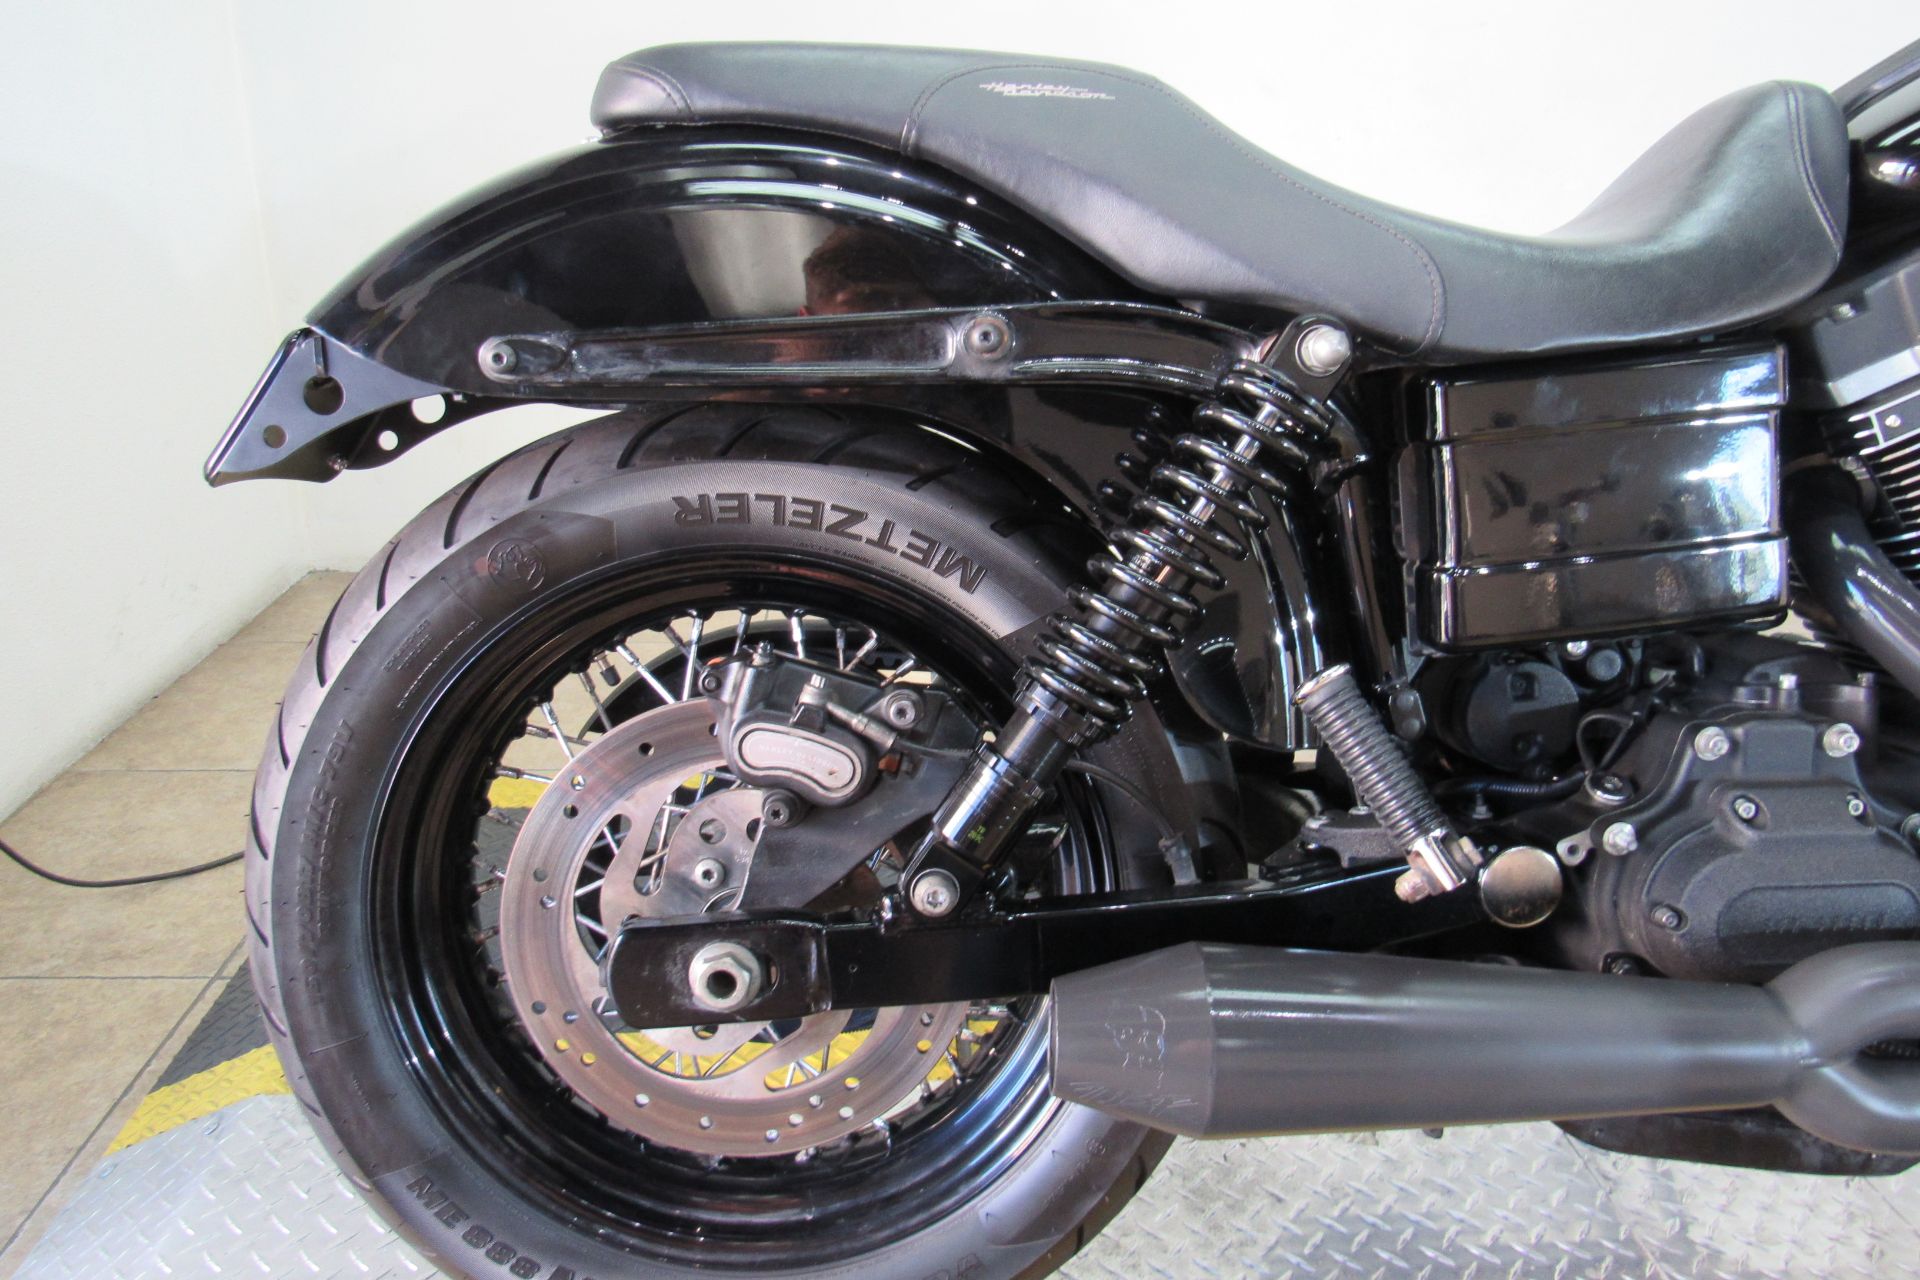 2014 Harley-Davidson Dyna® Street Bob® in Temecula, California - Photo 28